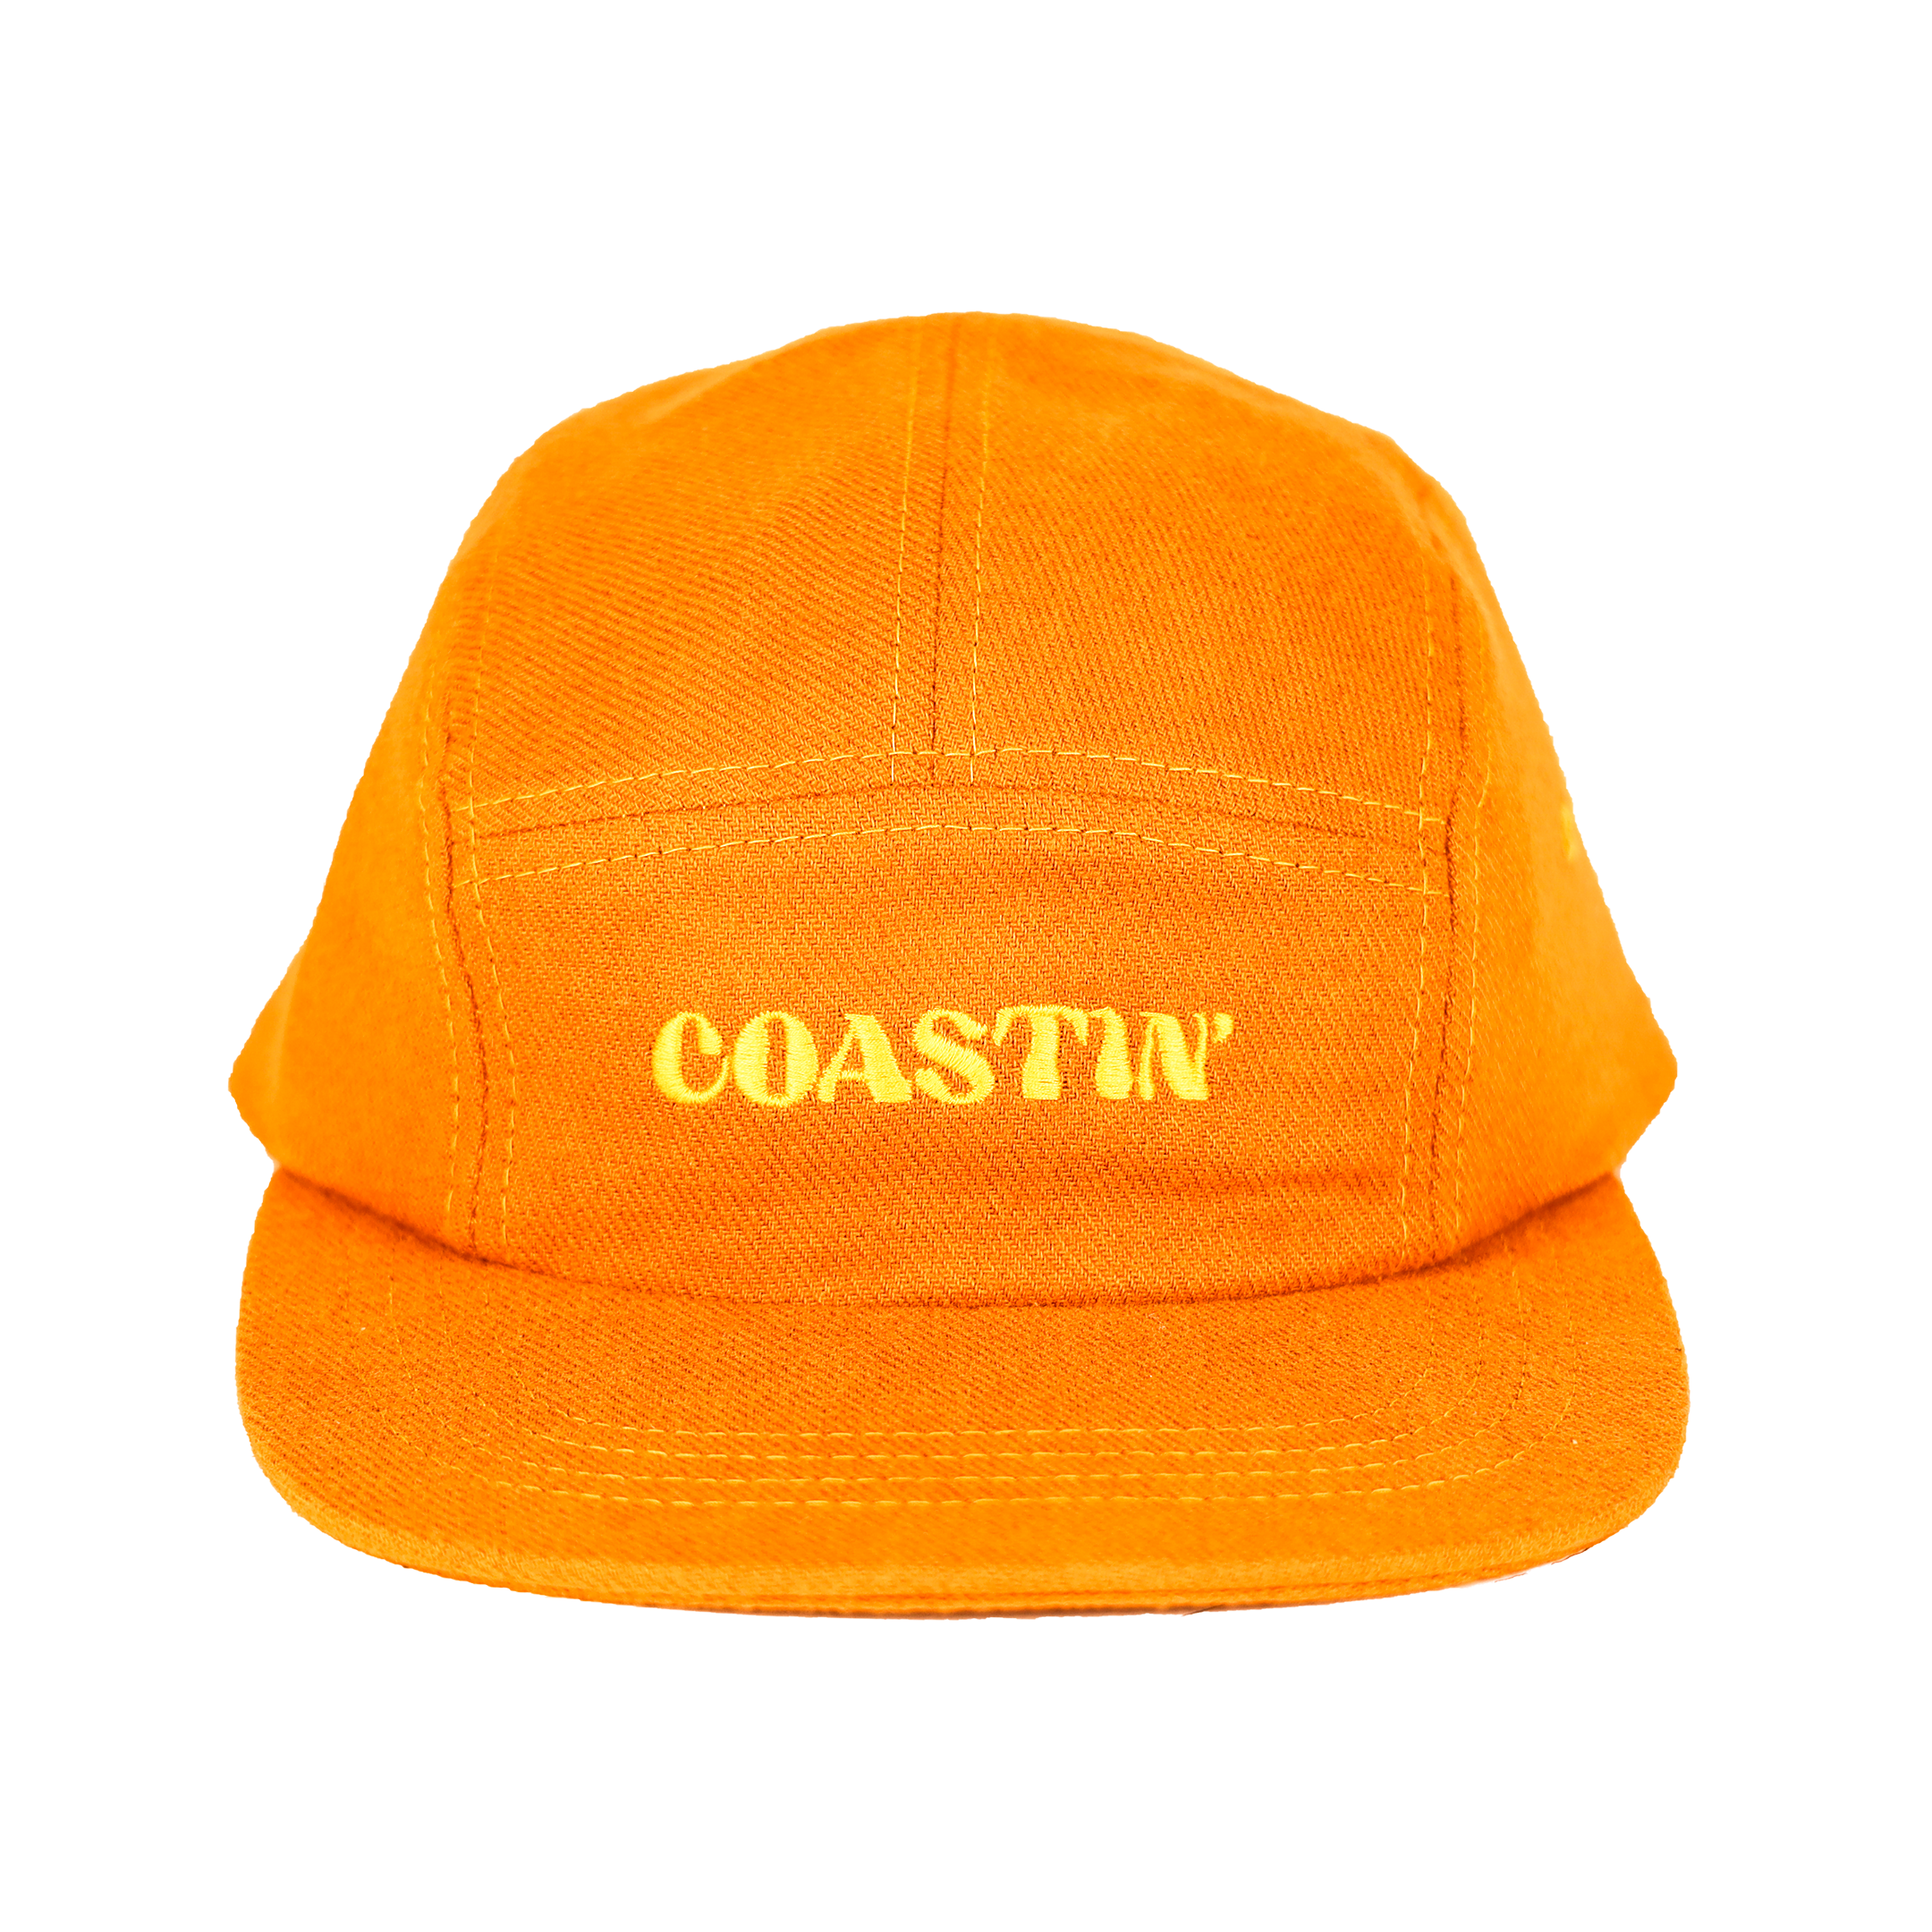 Coastin' Organic Cotton Camp Cap: Navy